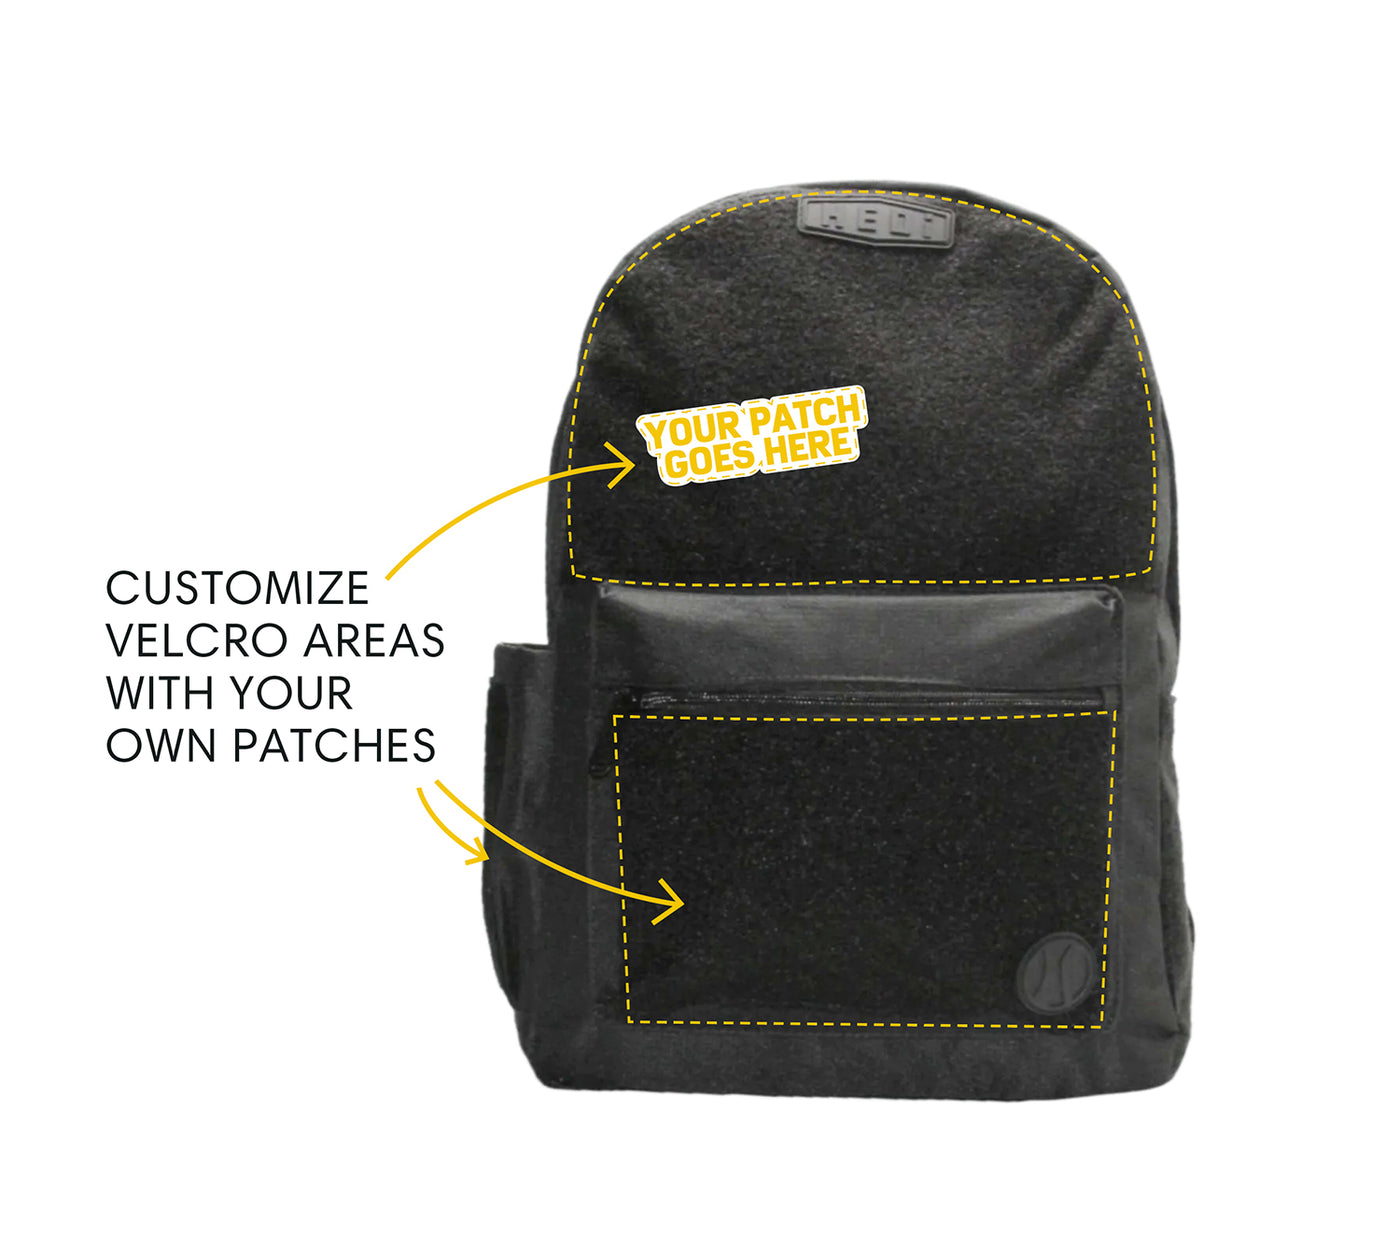 HEDi PACK BASE CAMP (Black) - Loop Velcro Backpack, 1 Main Compartment, Comfortable Straps, Side Phone/Water Bottle Holder, Front Zipper Pocket